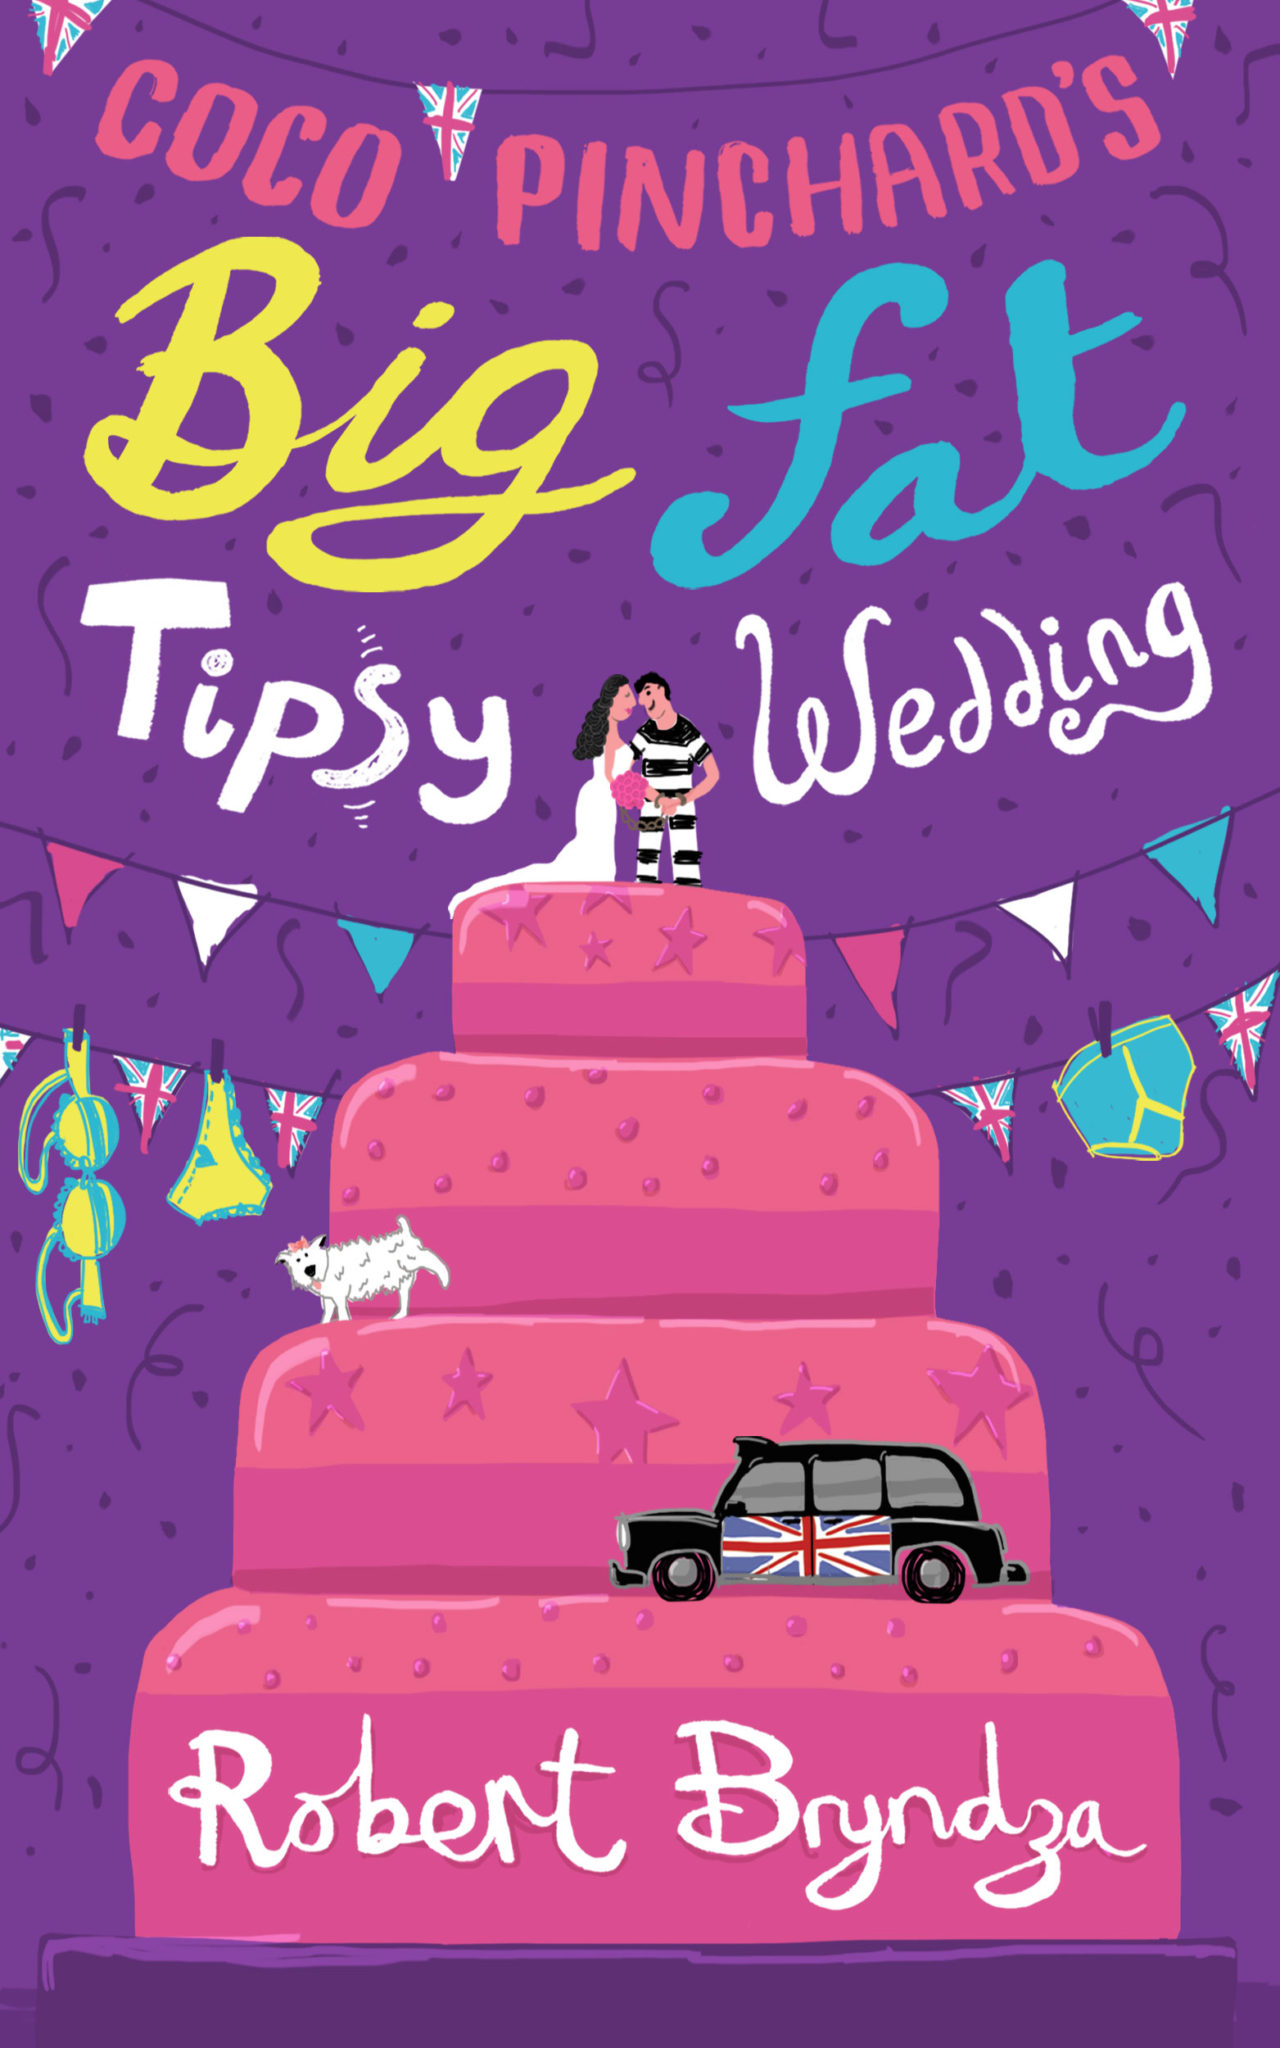 Coco Pinchard’s Big Fat Tipsy Wedding by Robert Bryndza